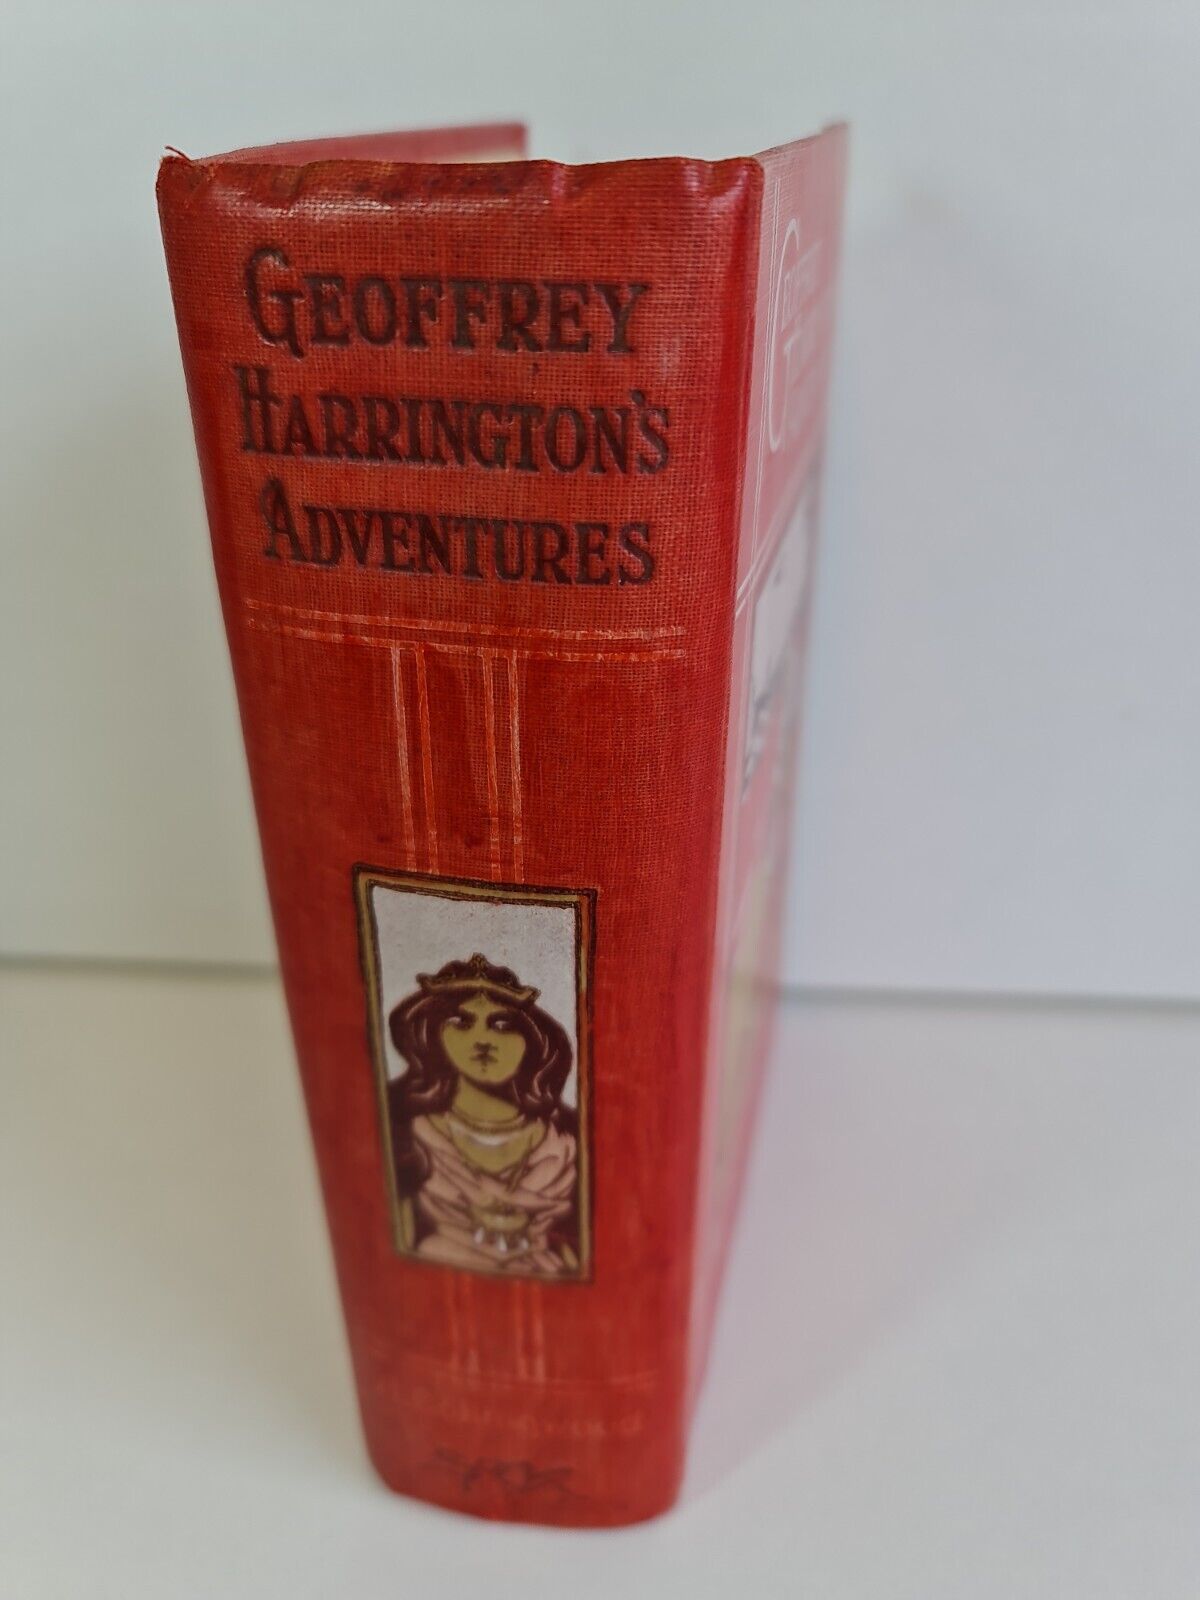 Geoffrey Harrington's Adventures by Harry Collingwood